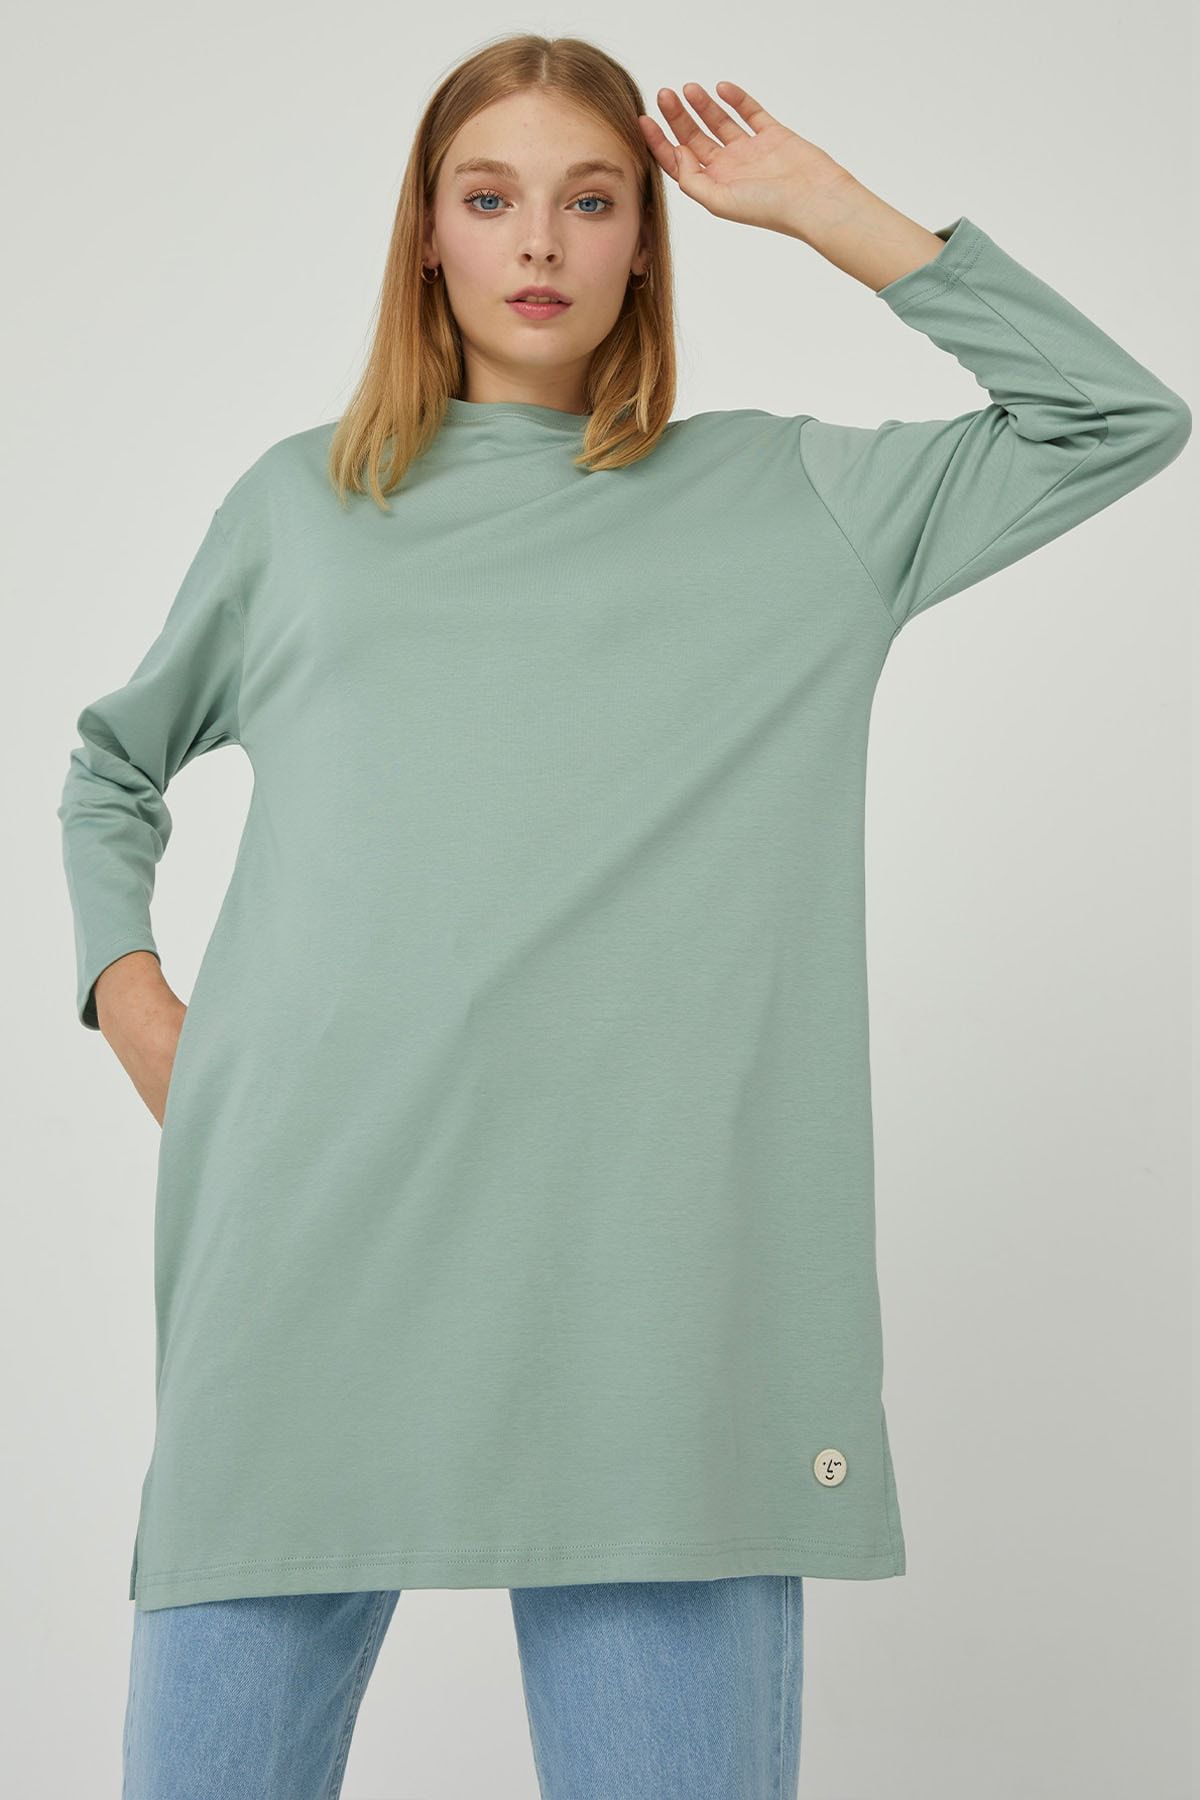 Hooopstore Kadın Mint Yeşili Peru Pamuk Uzun Kol Basic Sweatshirt